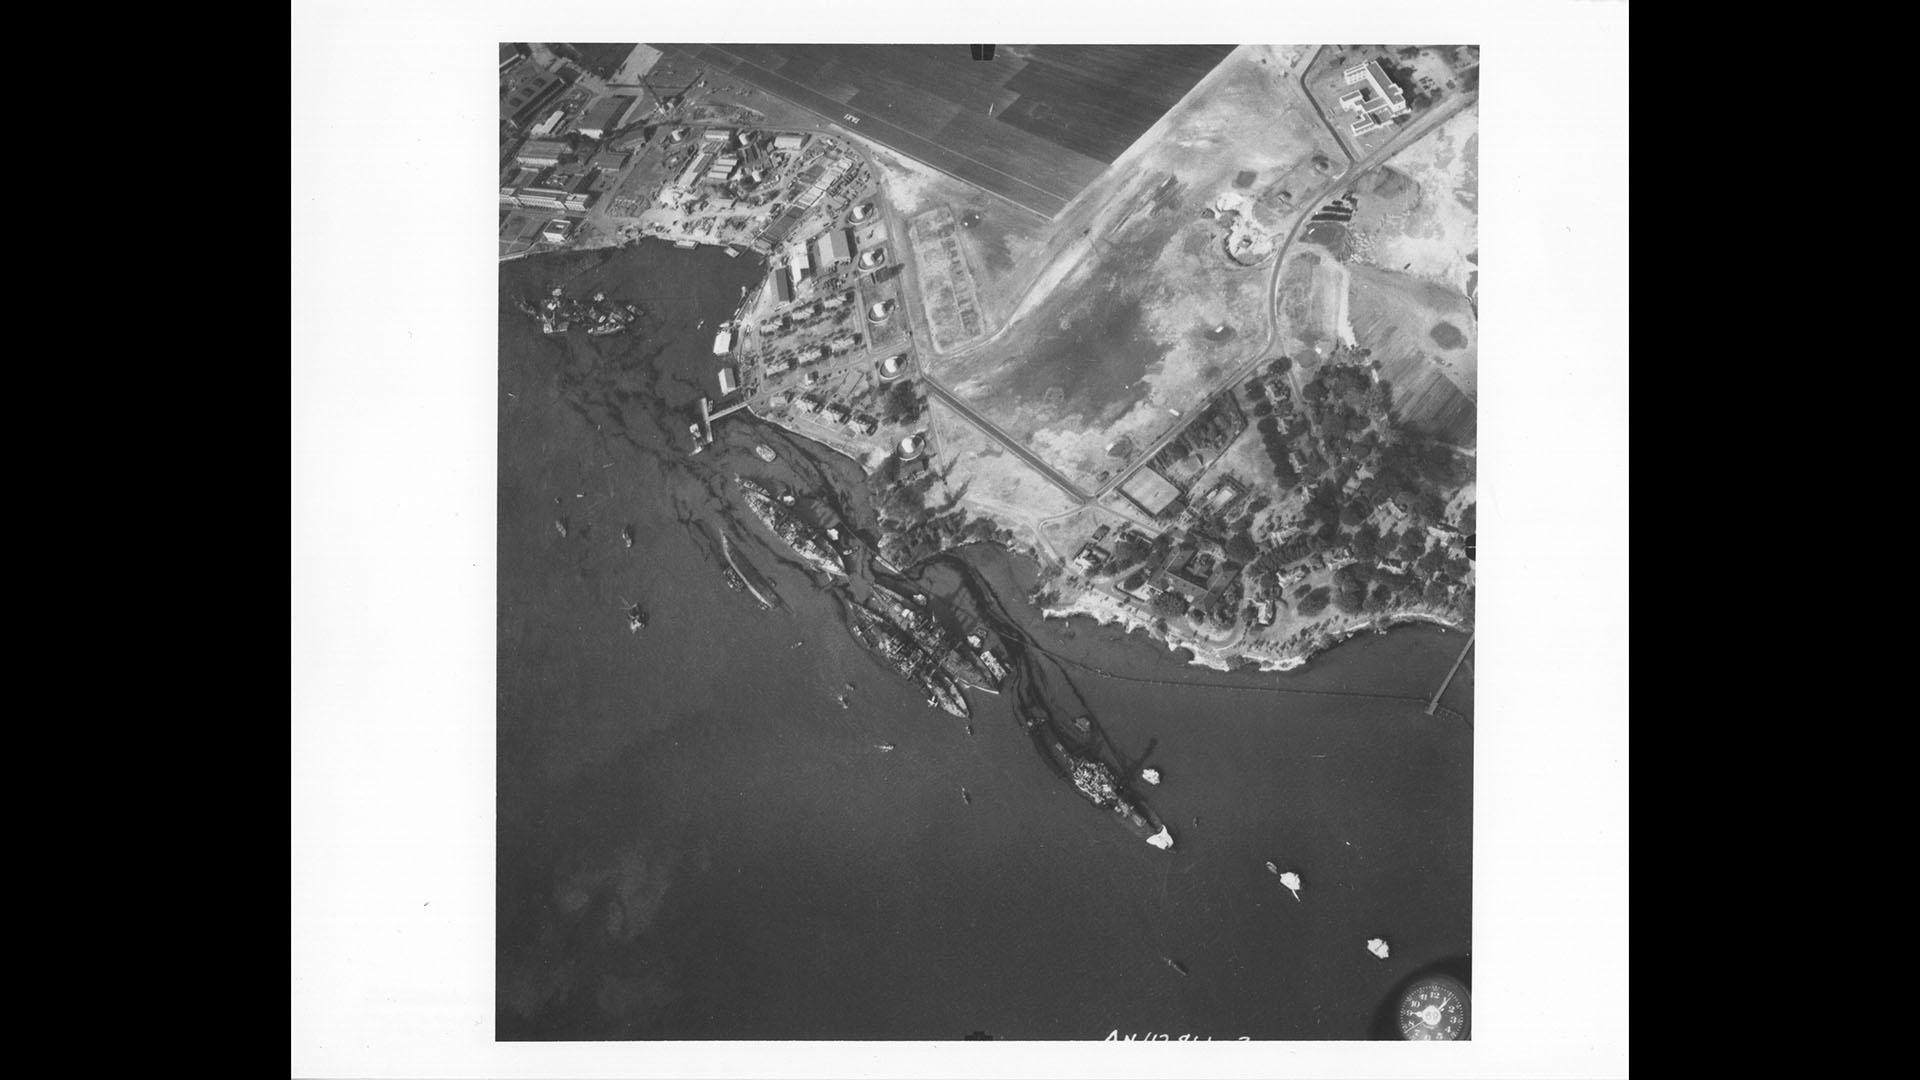 Photograph of ships at Pearl Harbor following Japanese attack.